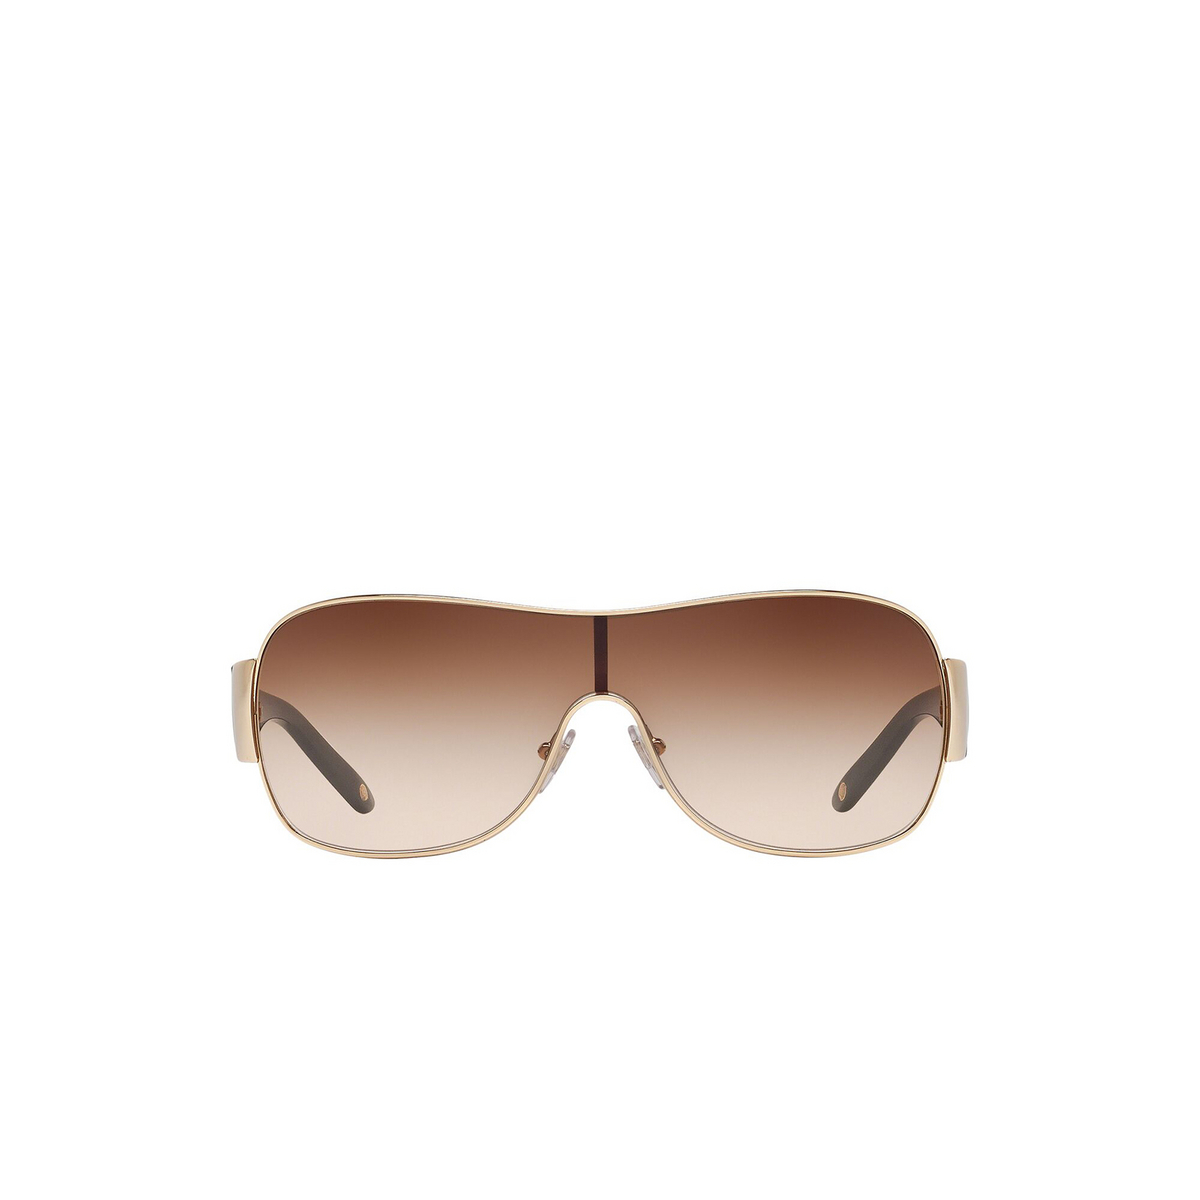 Versace® Square Sunglasses: VE2101 color Gold 100213 - front view.